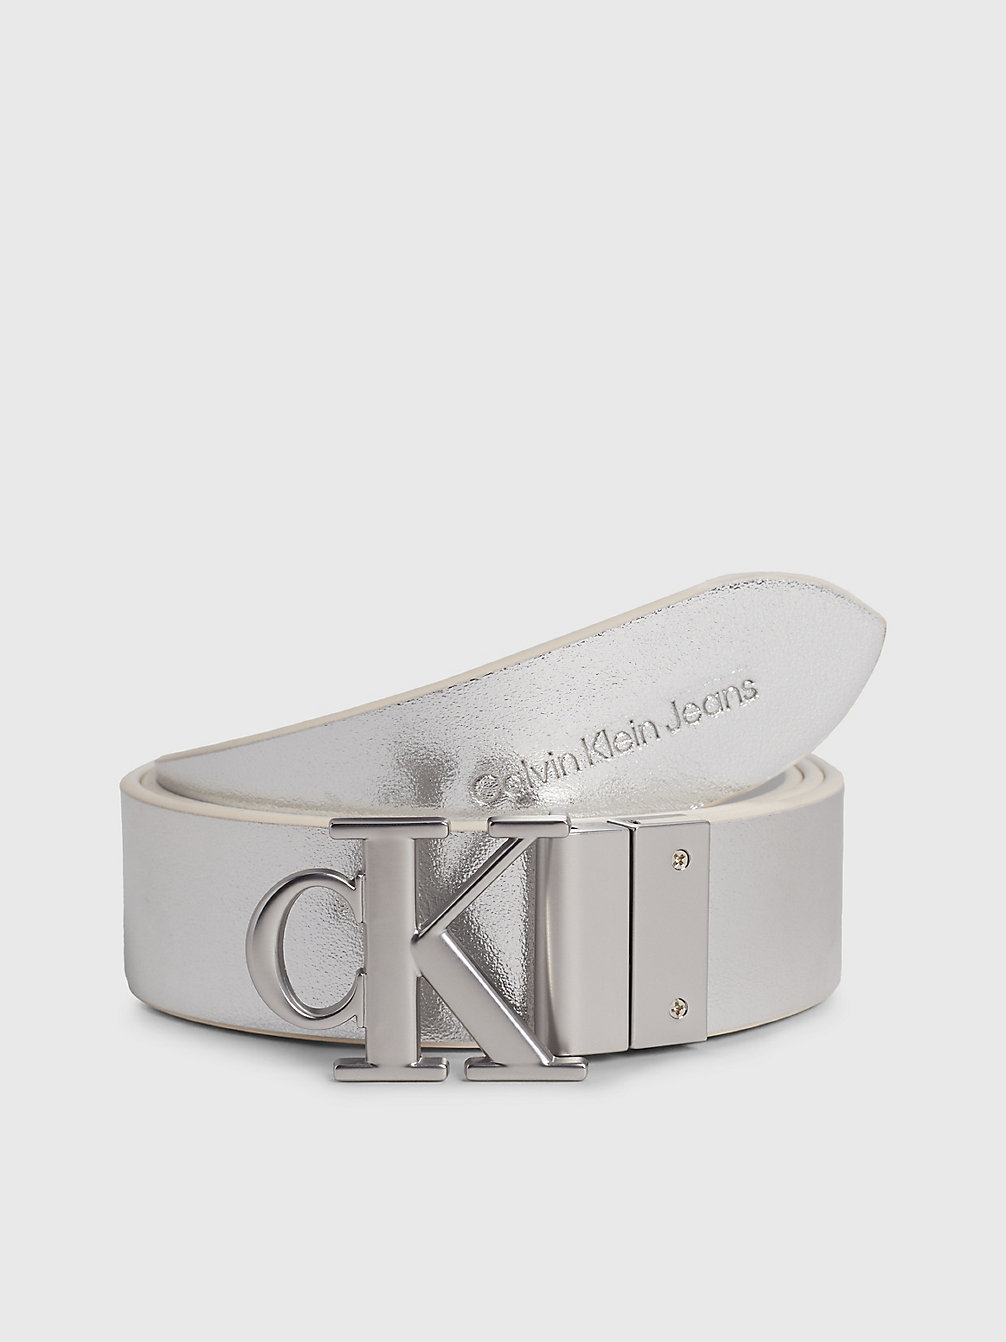 WHITE/SILVER SPECCHIO Reversible Logo Belt undefined Women Calvin Klein